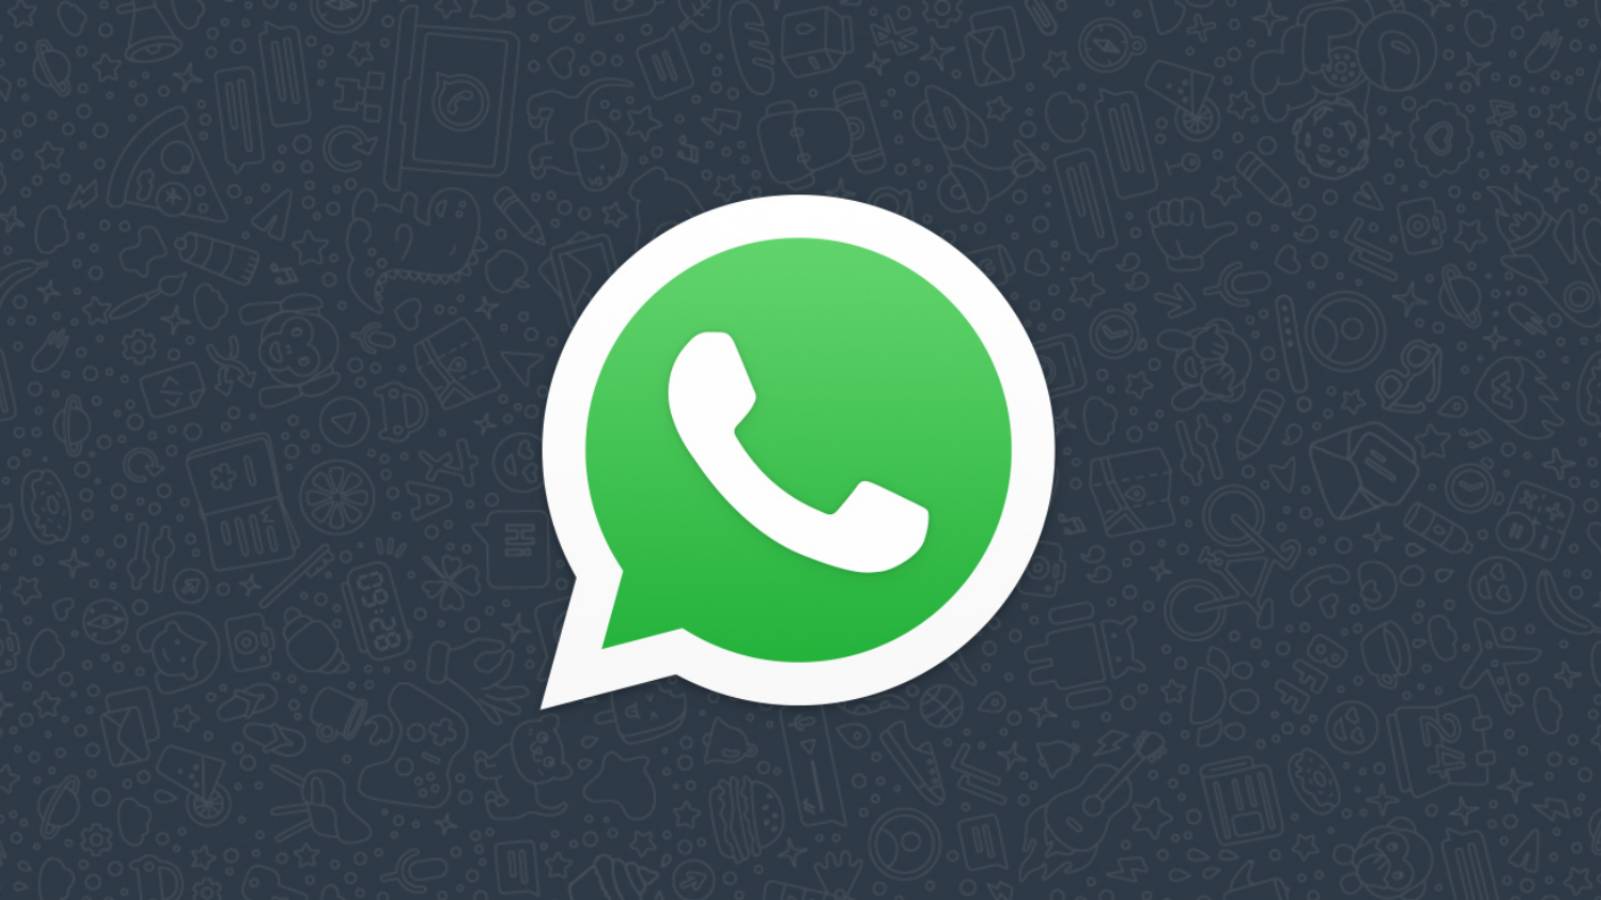 WhatsApp inutilisable